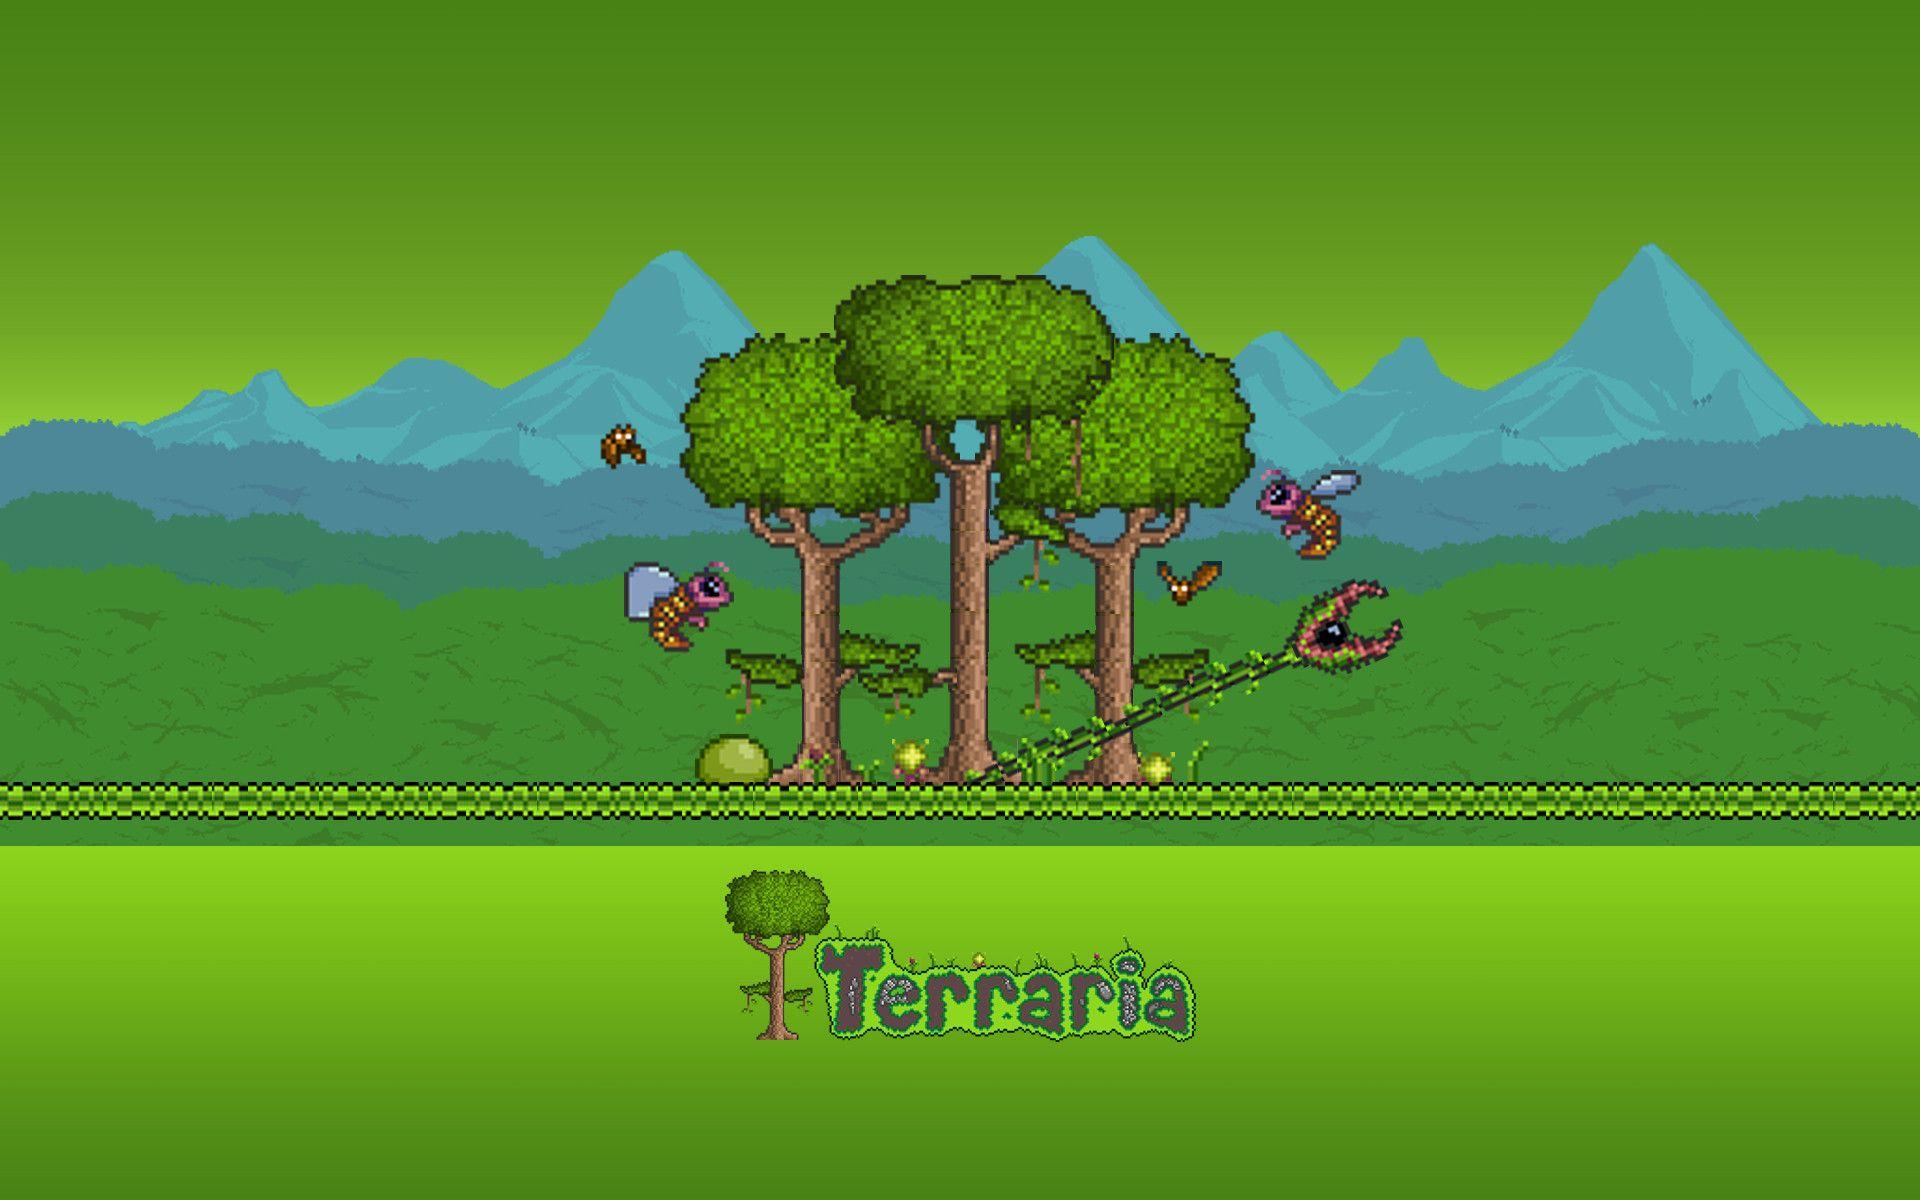 terraria pc free download full